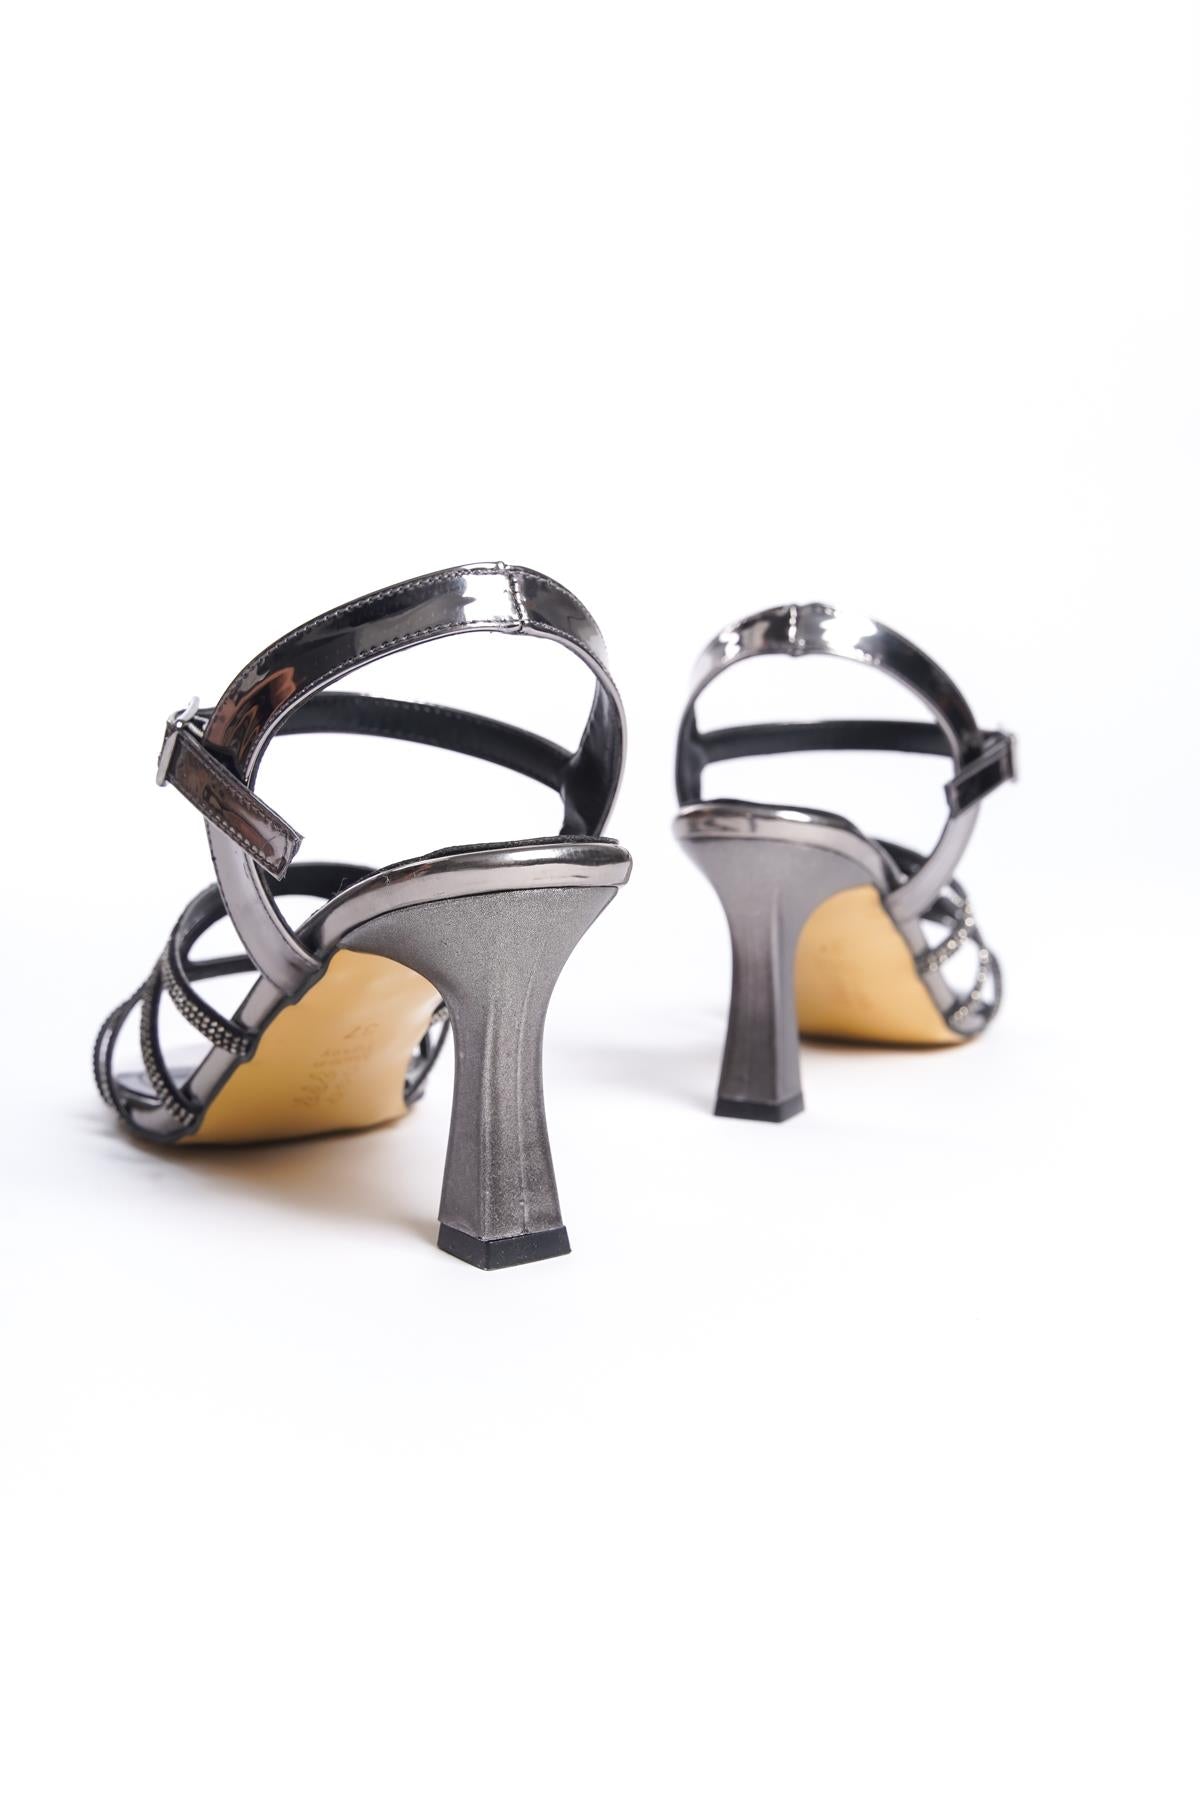 Women's Patent Leather Platinum Thin Heel Stone Sandals 8 cm Heel - STREETMODE™